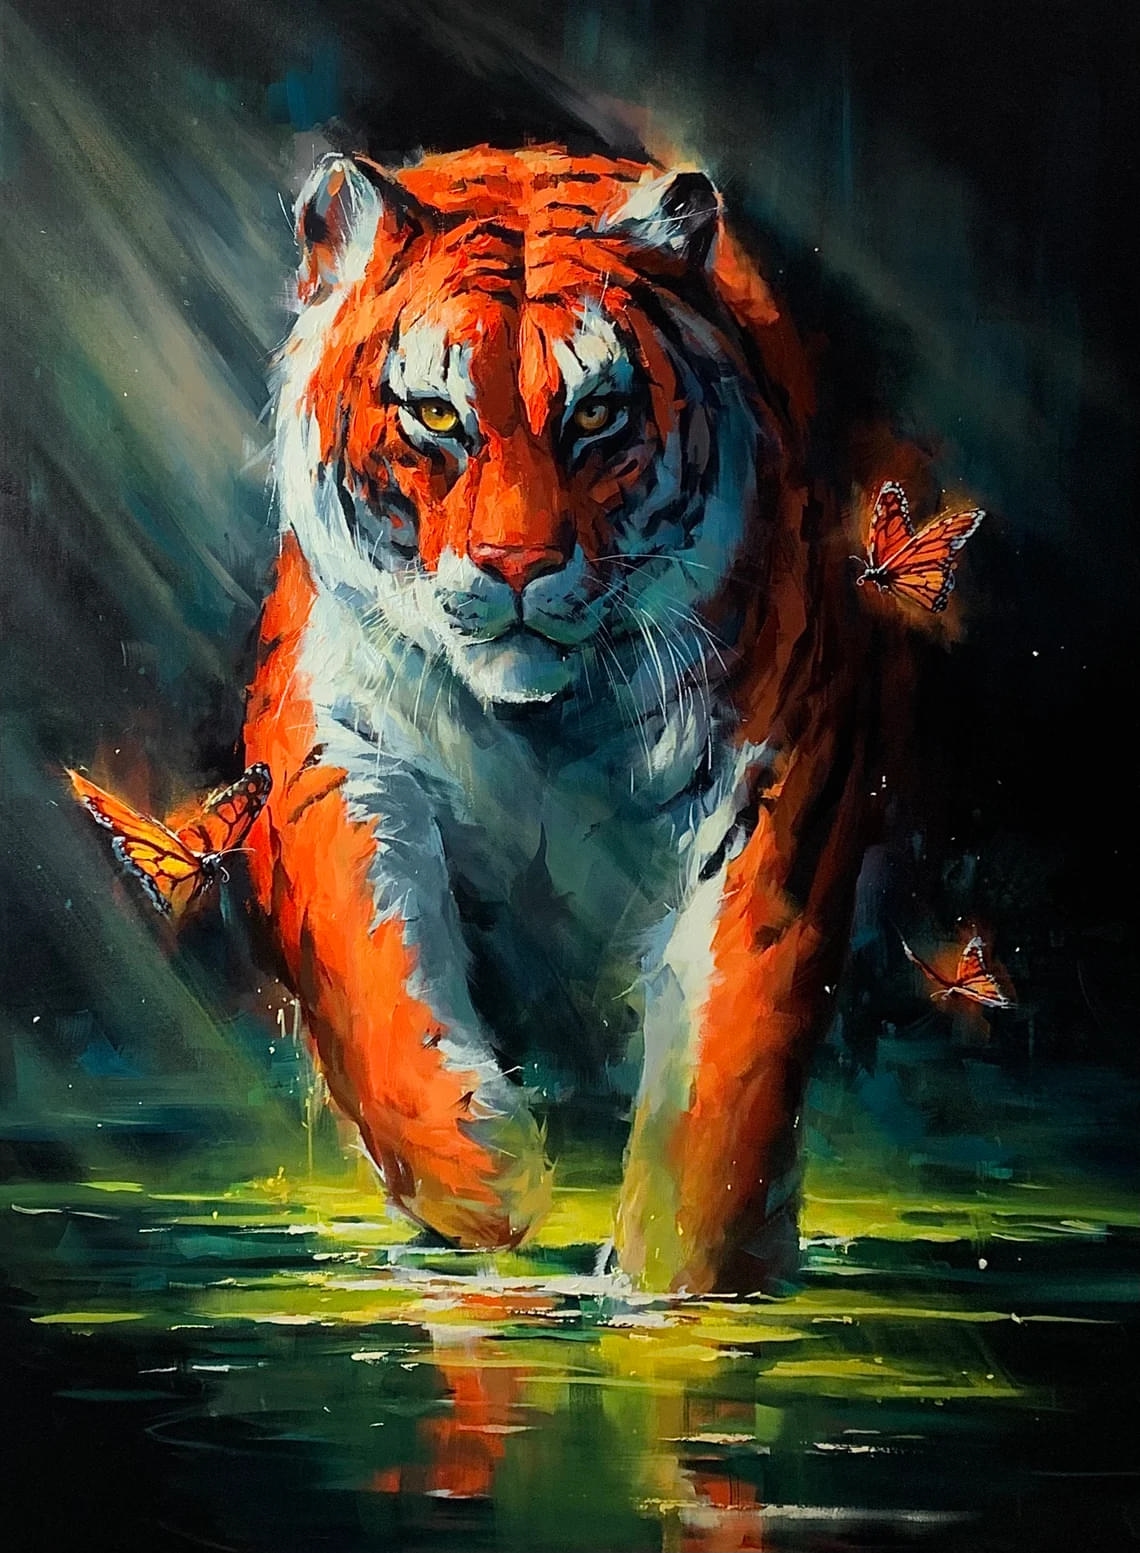 "Wading in Light" - Tiger - Wildlife Artwork